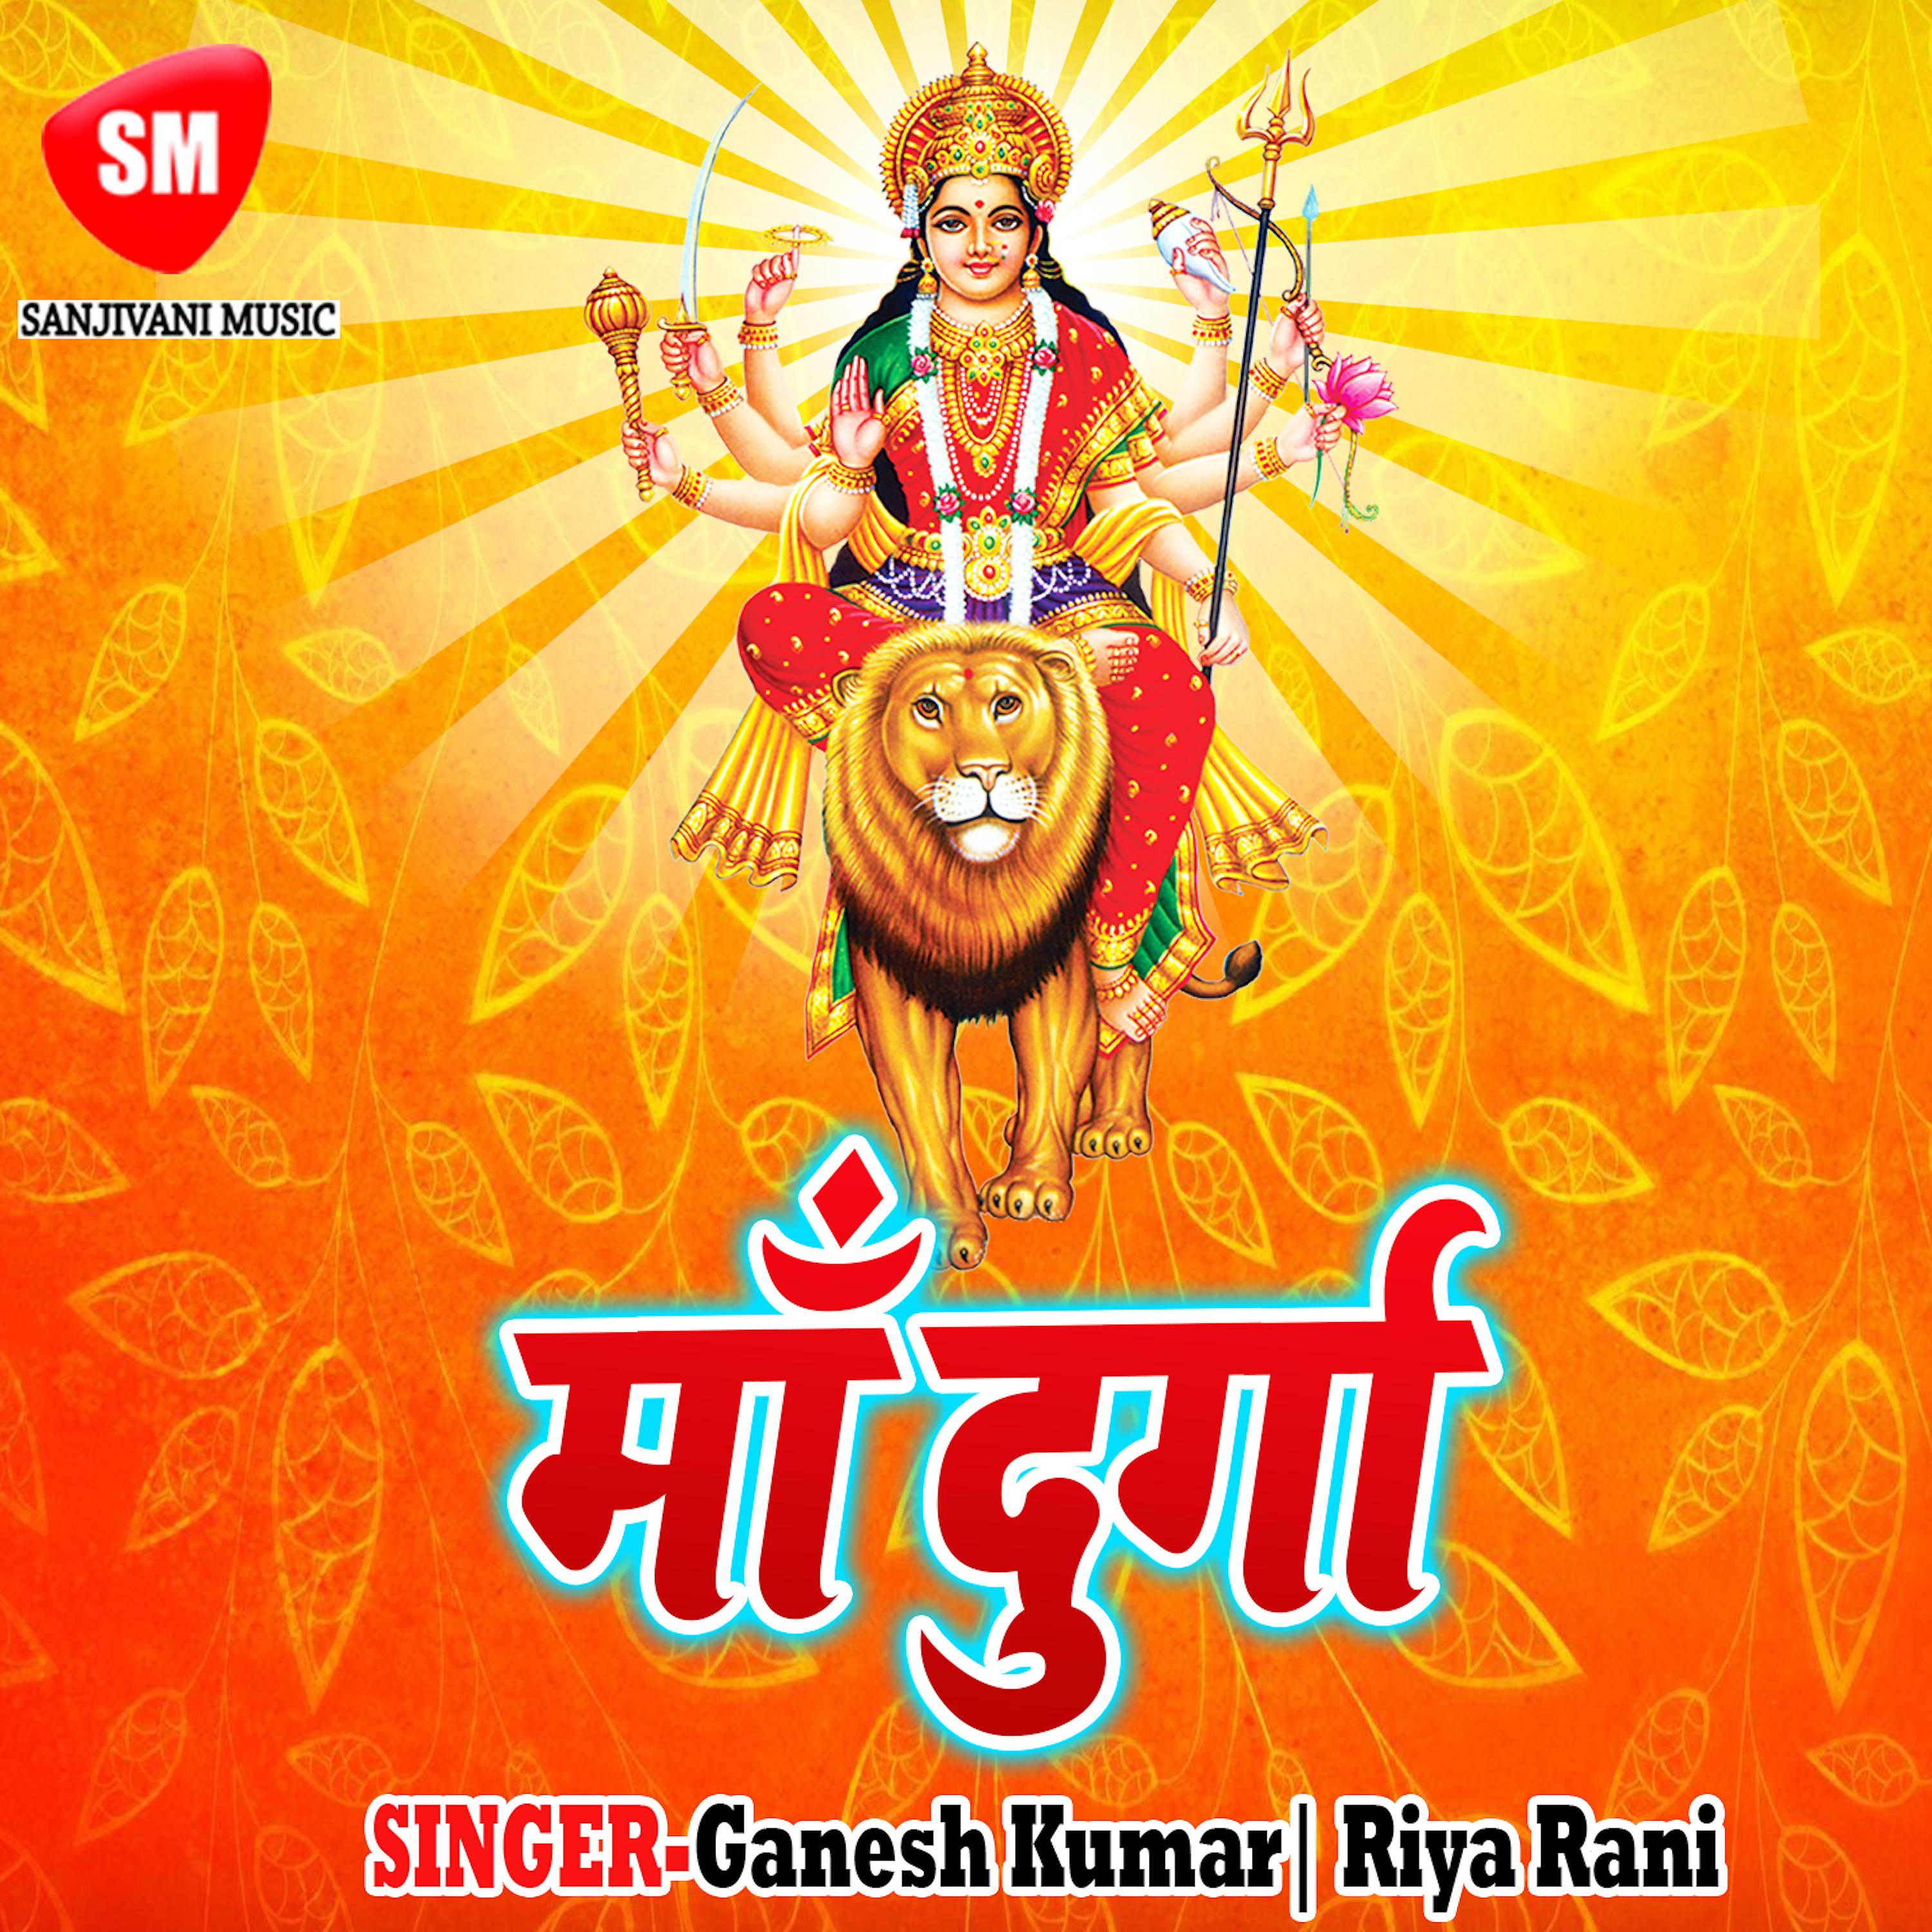 Постер альбома Maa Durga